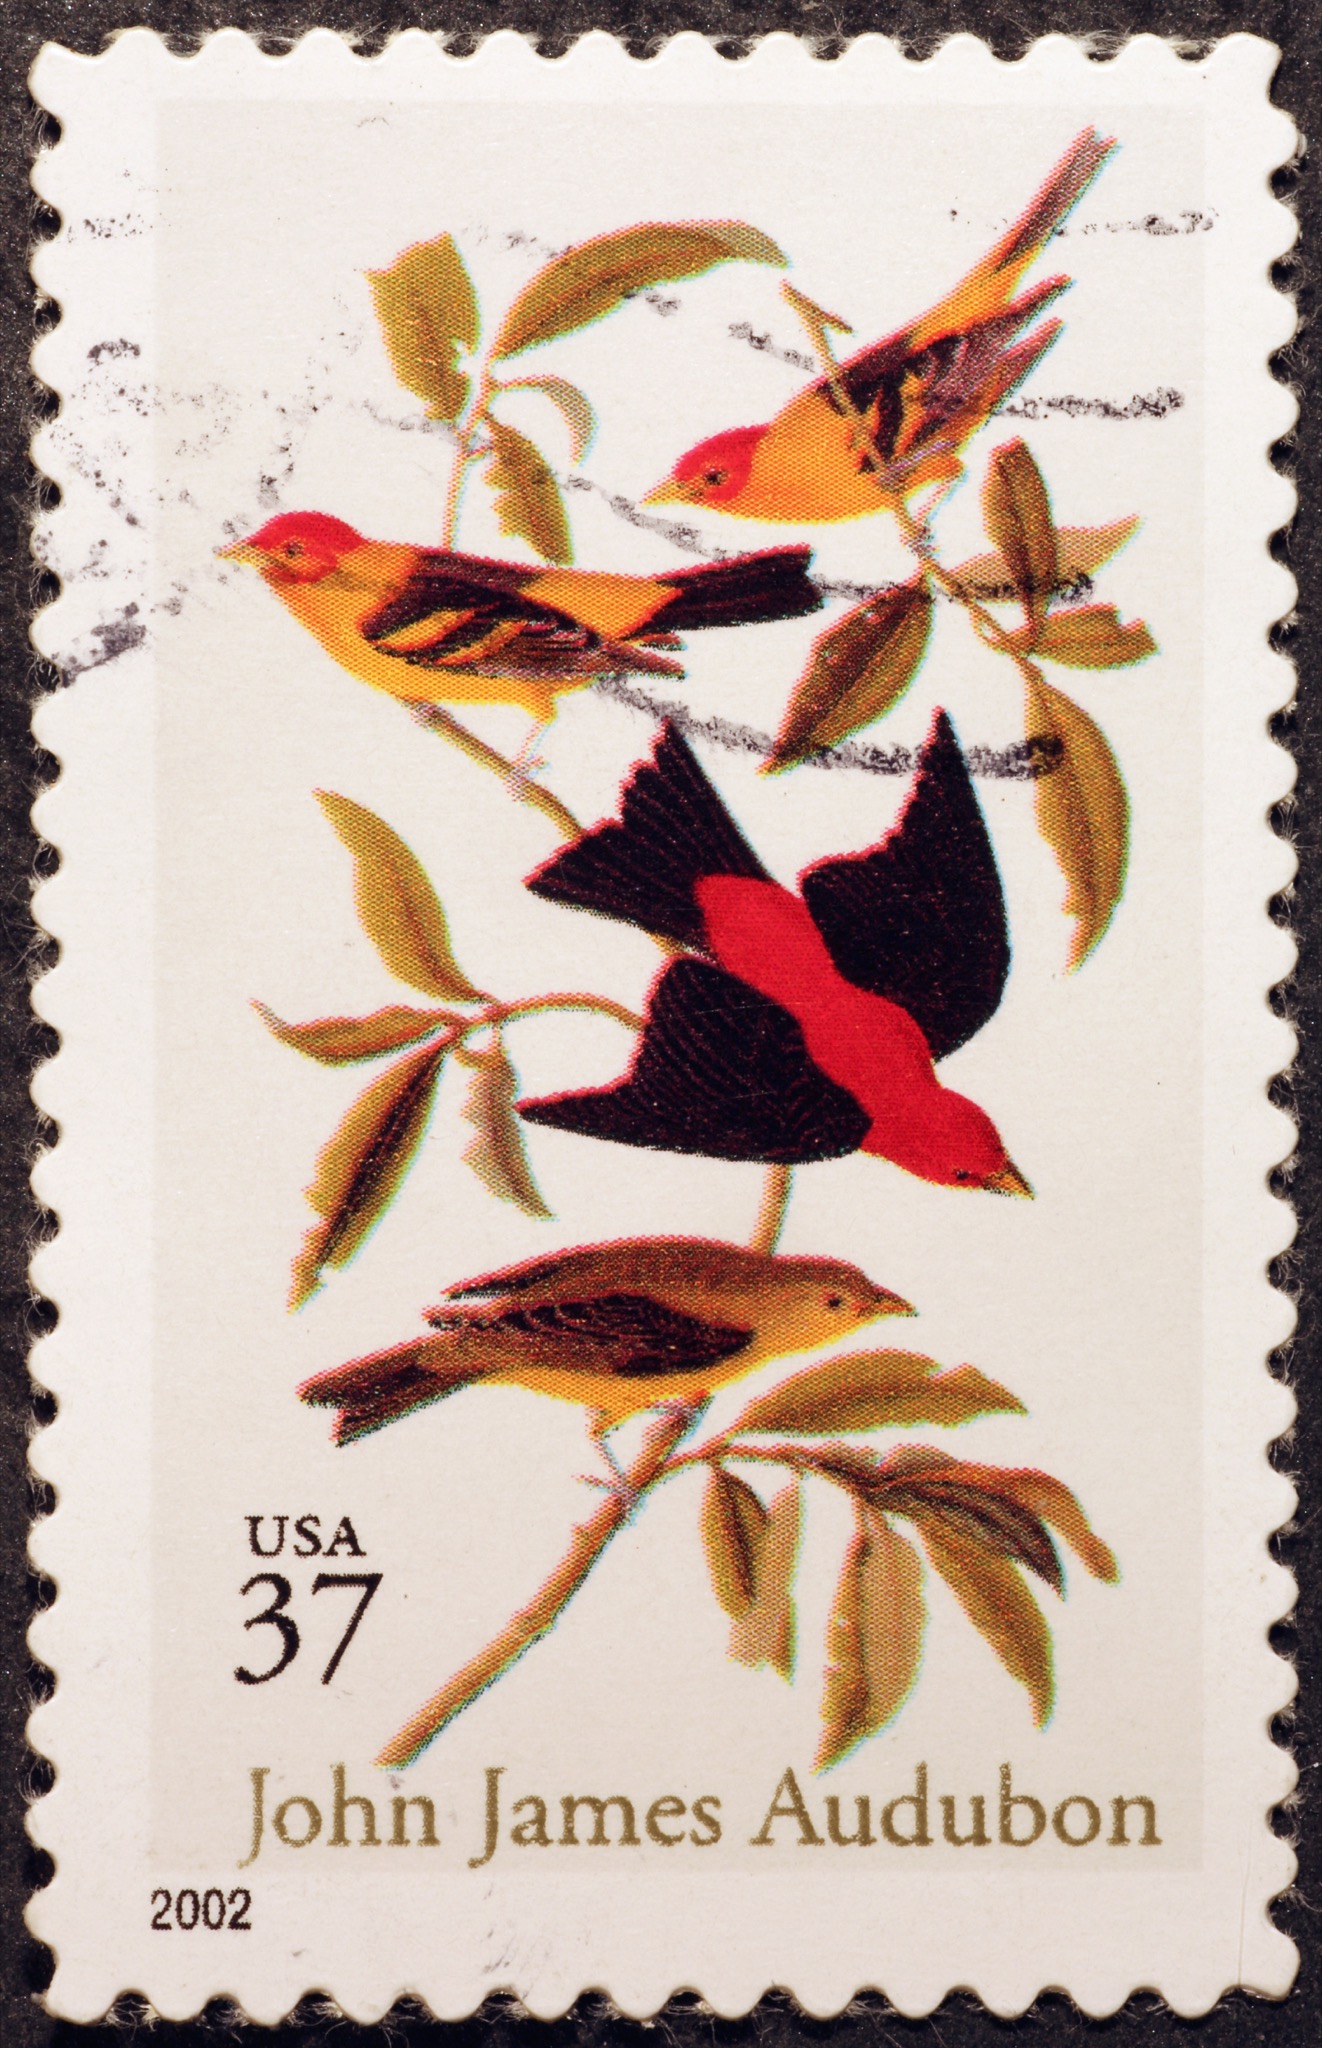 John James Audubon painting on american postage stamp